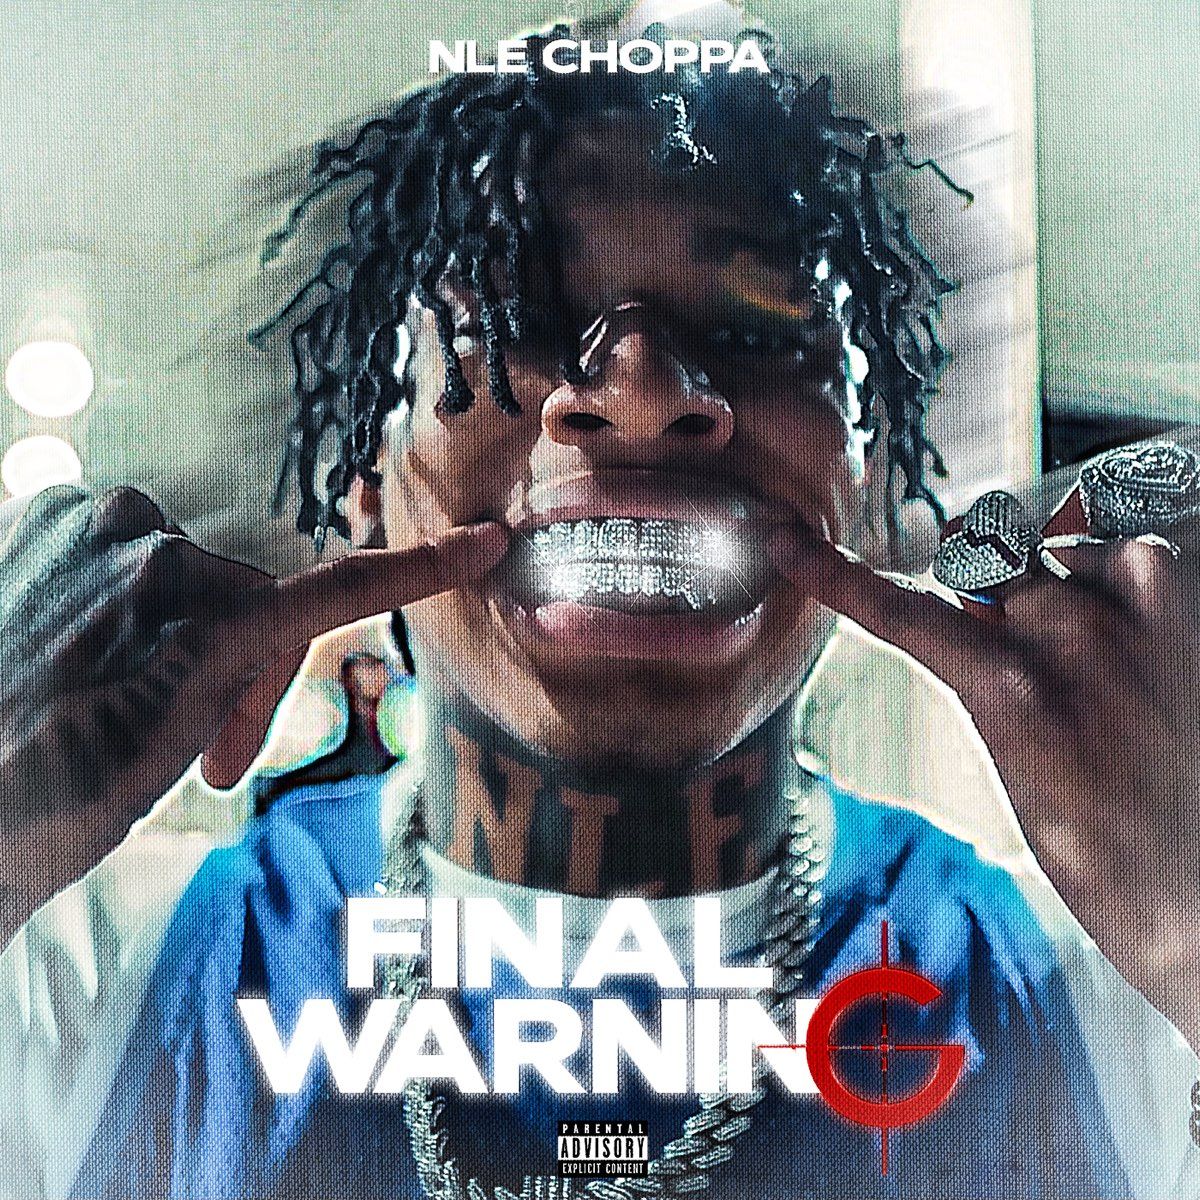 Final Warning by NLE Choppa. Album covers, American rappers, Rapper